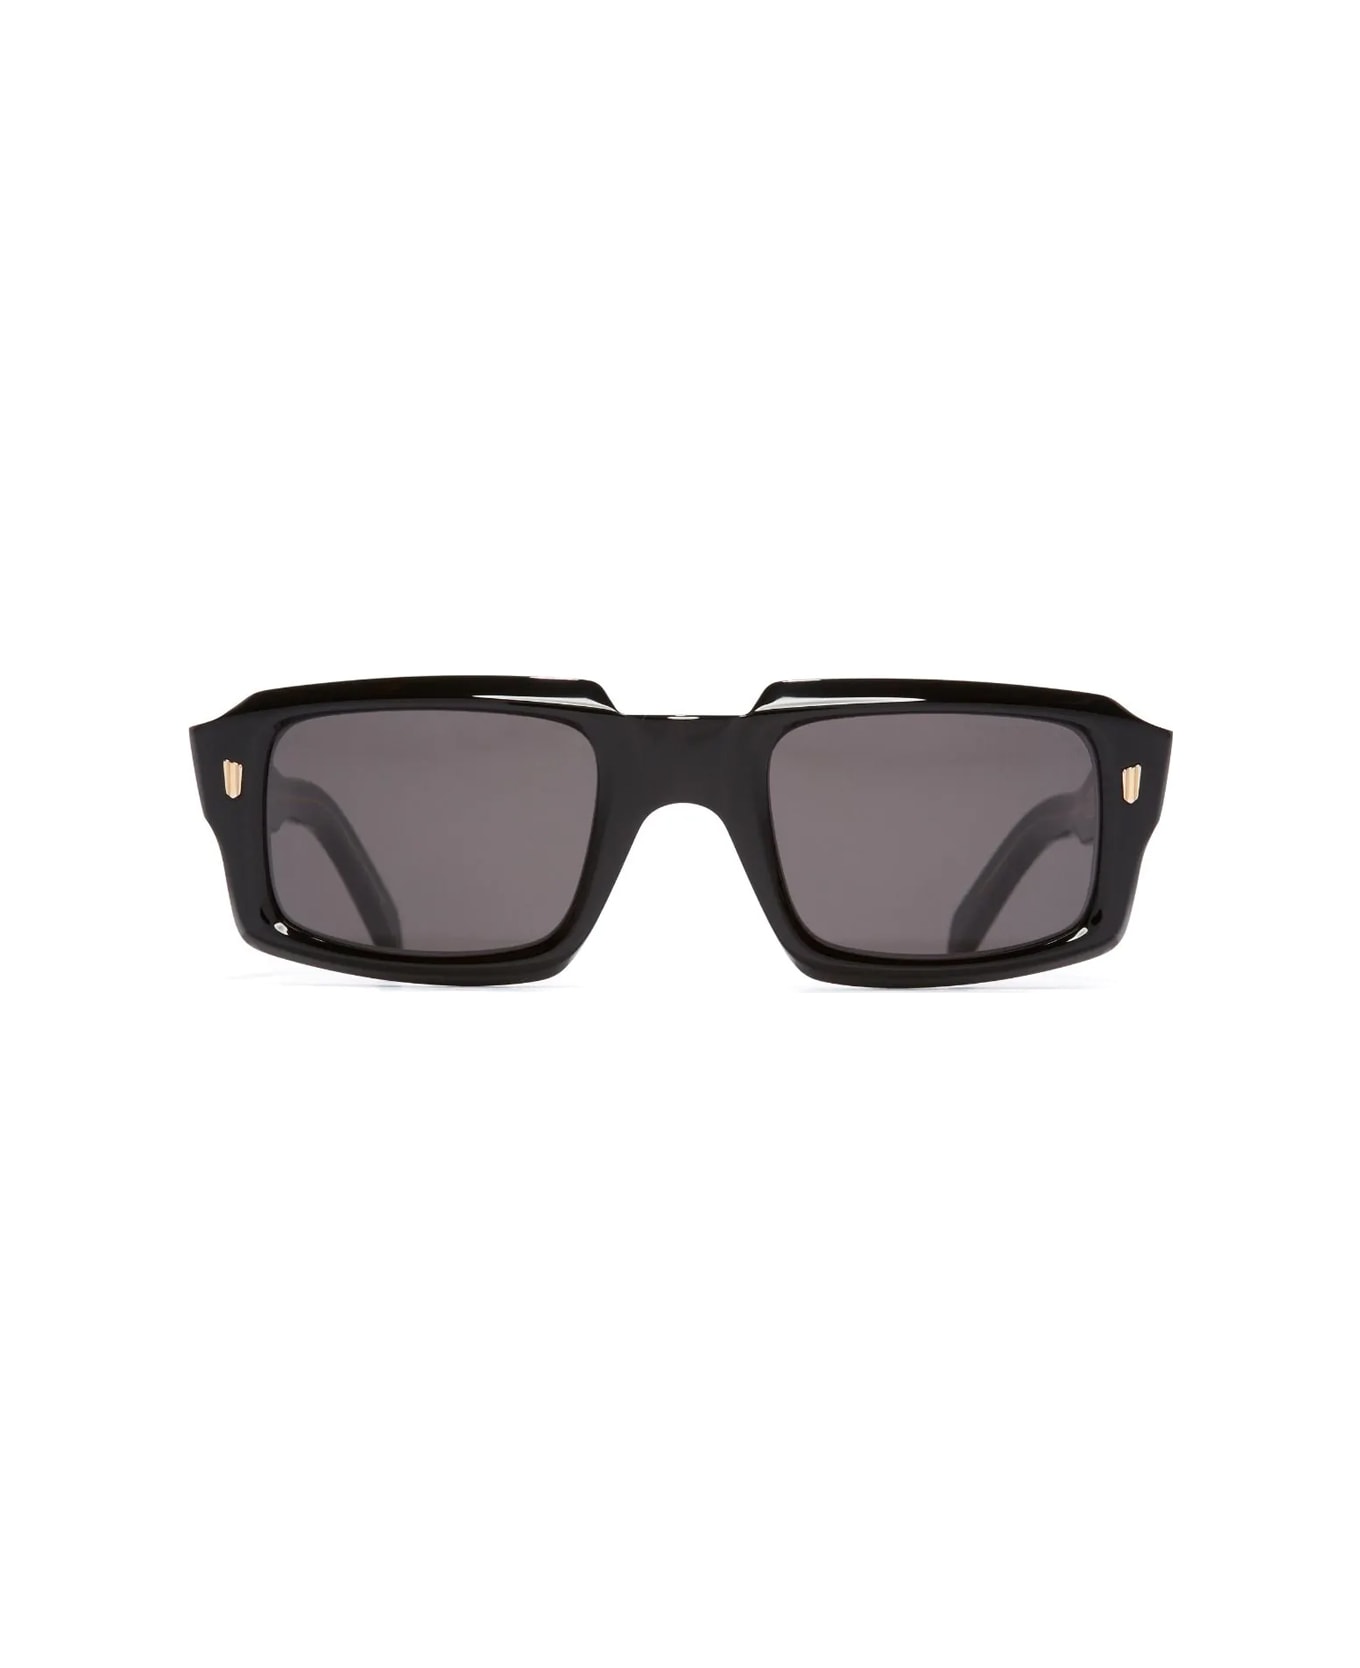 Cutler and Gross 9495 01 Black Sunglasses - Nero サングラス